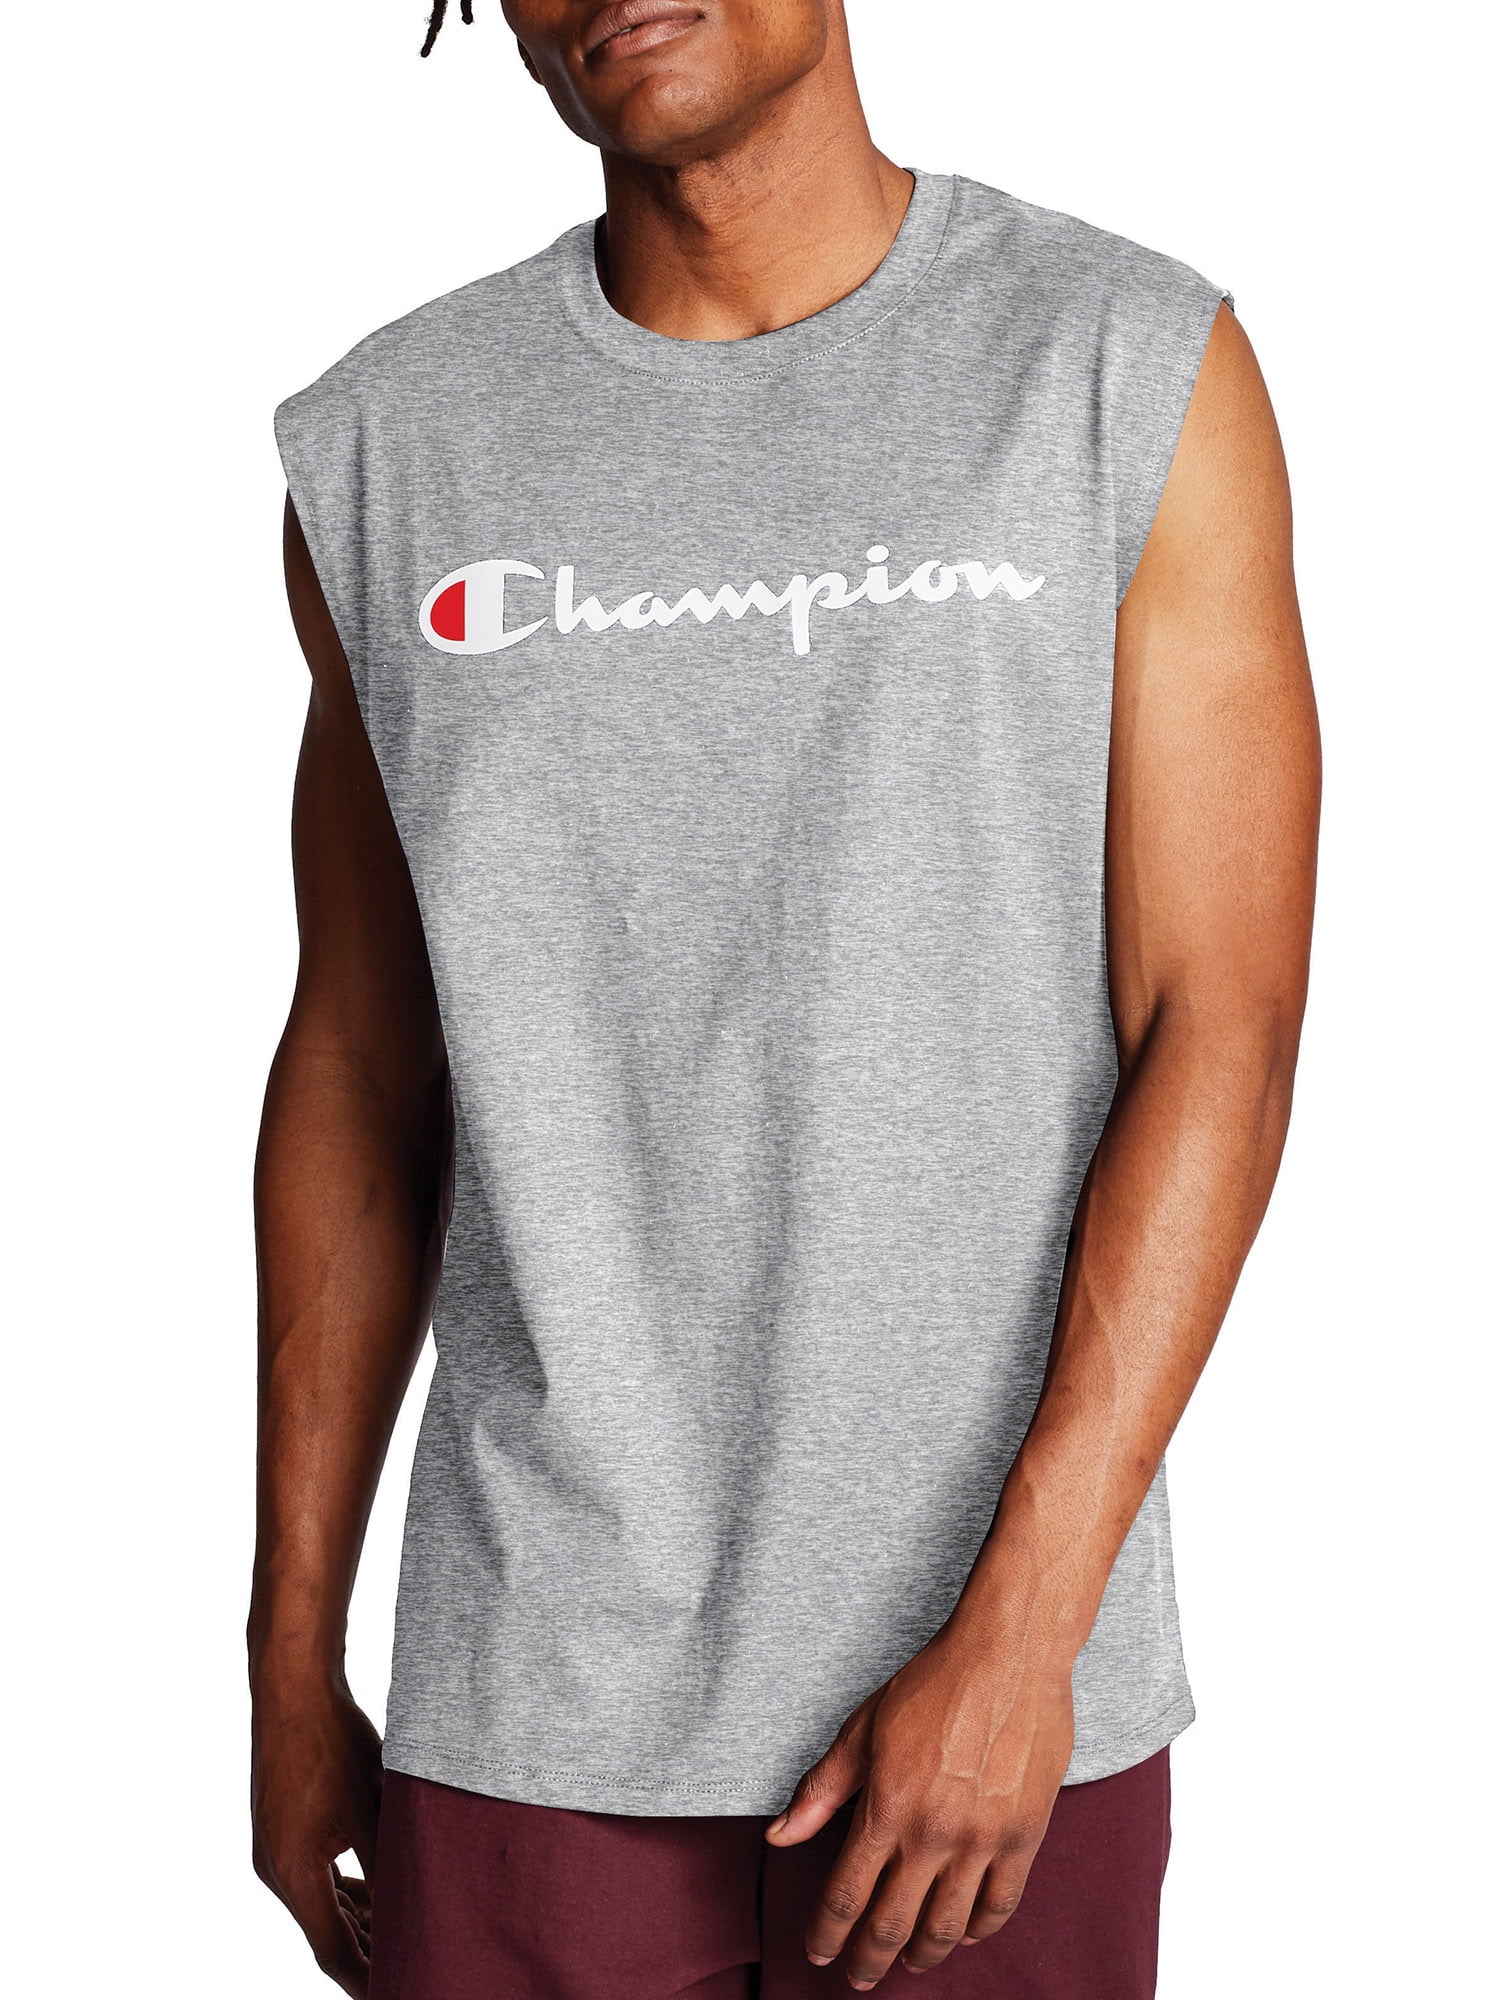 champion men's classic jersey muscle t shirt